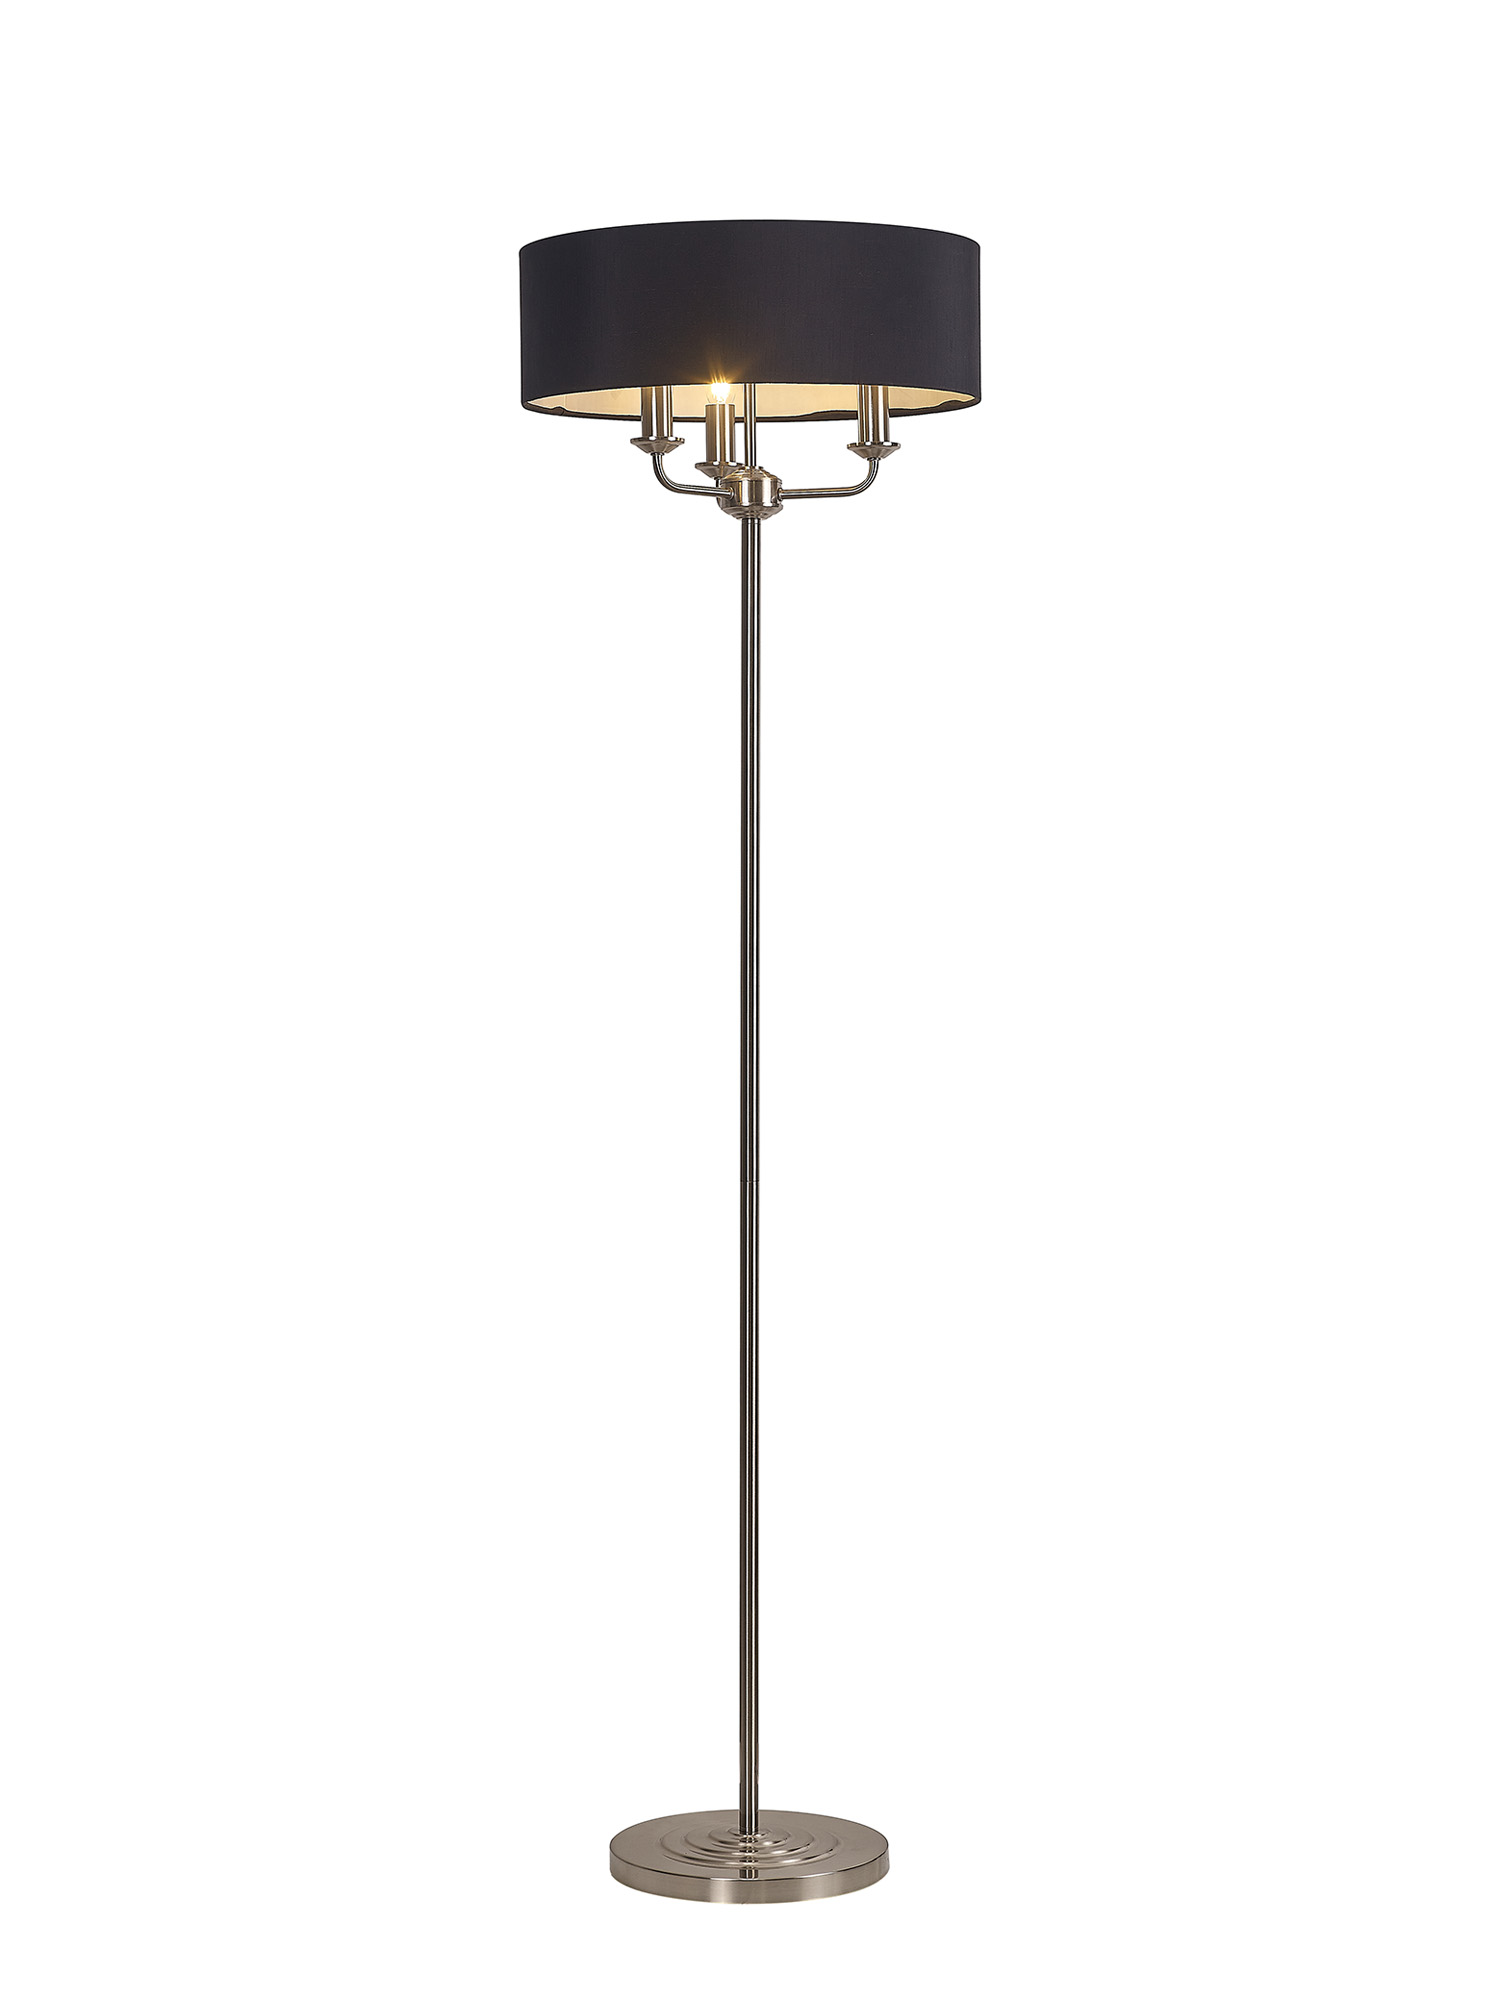 DK0923  Banyan 45cm 3 Light Floor Lamp Satin Nickel, Black